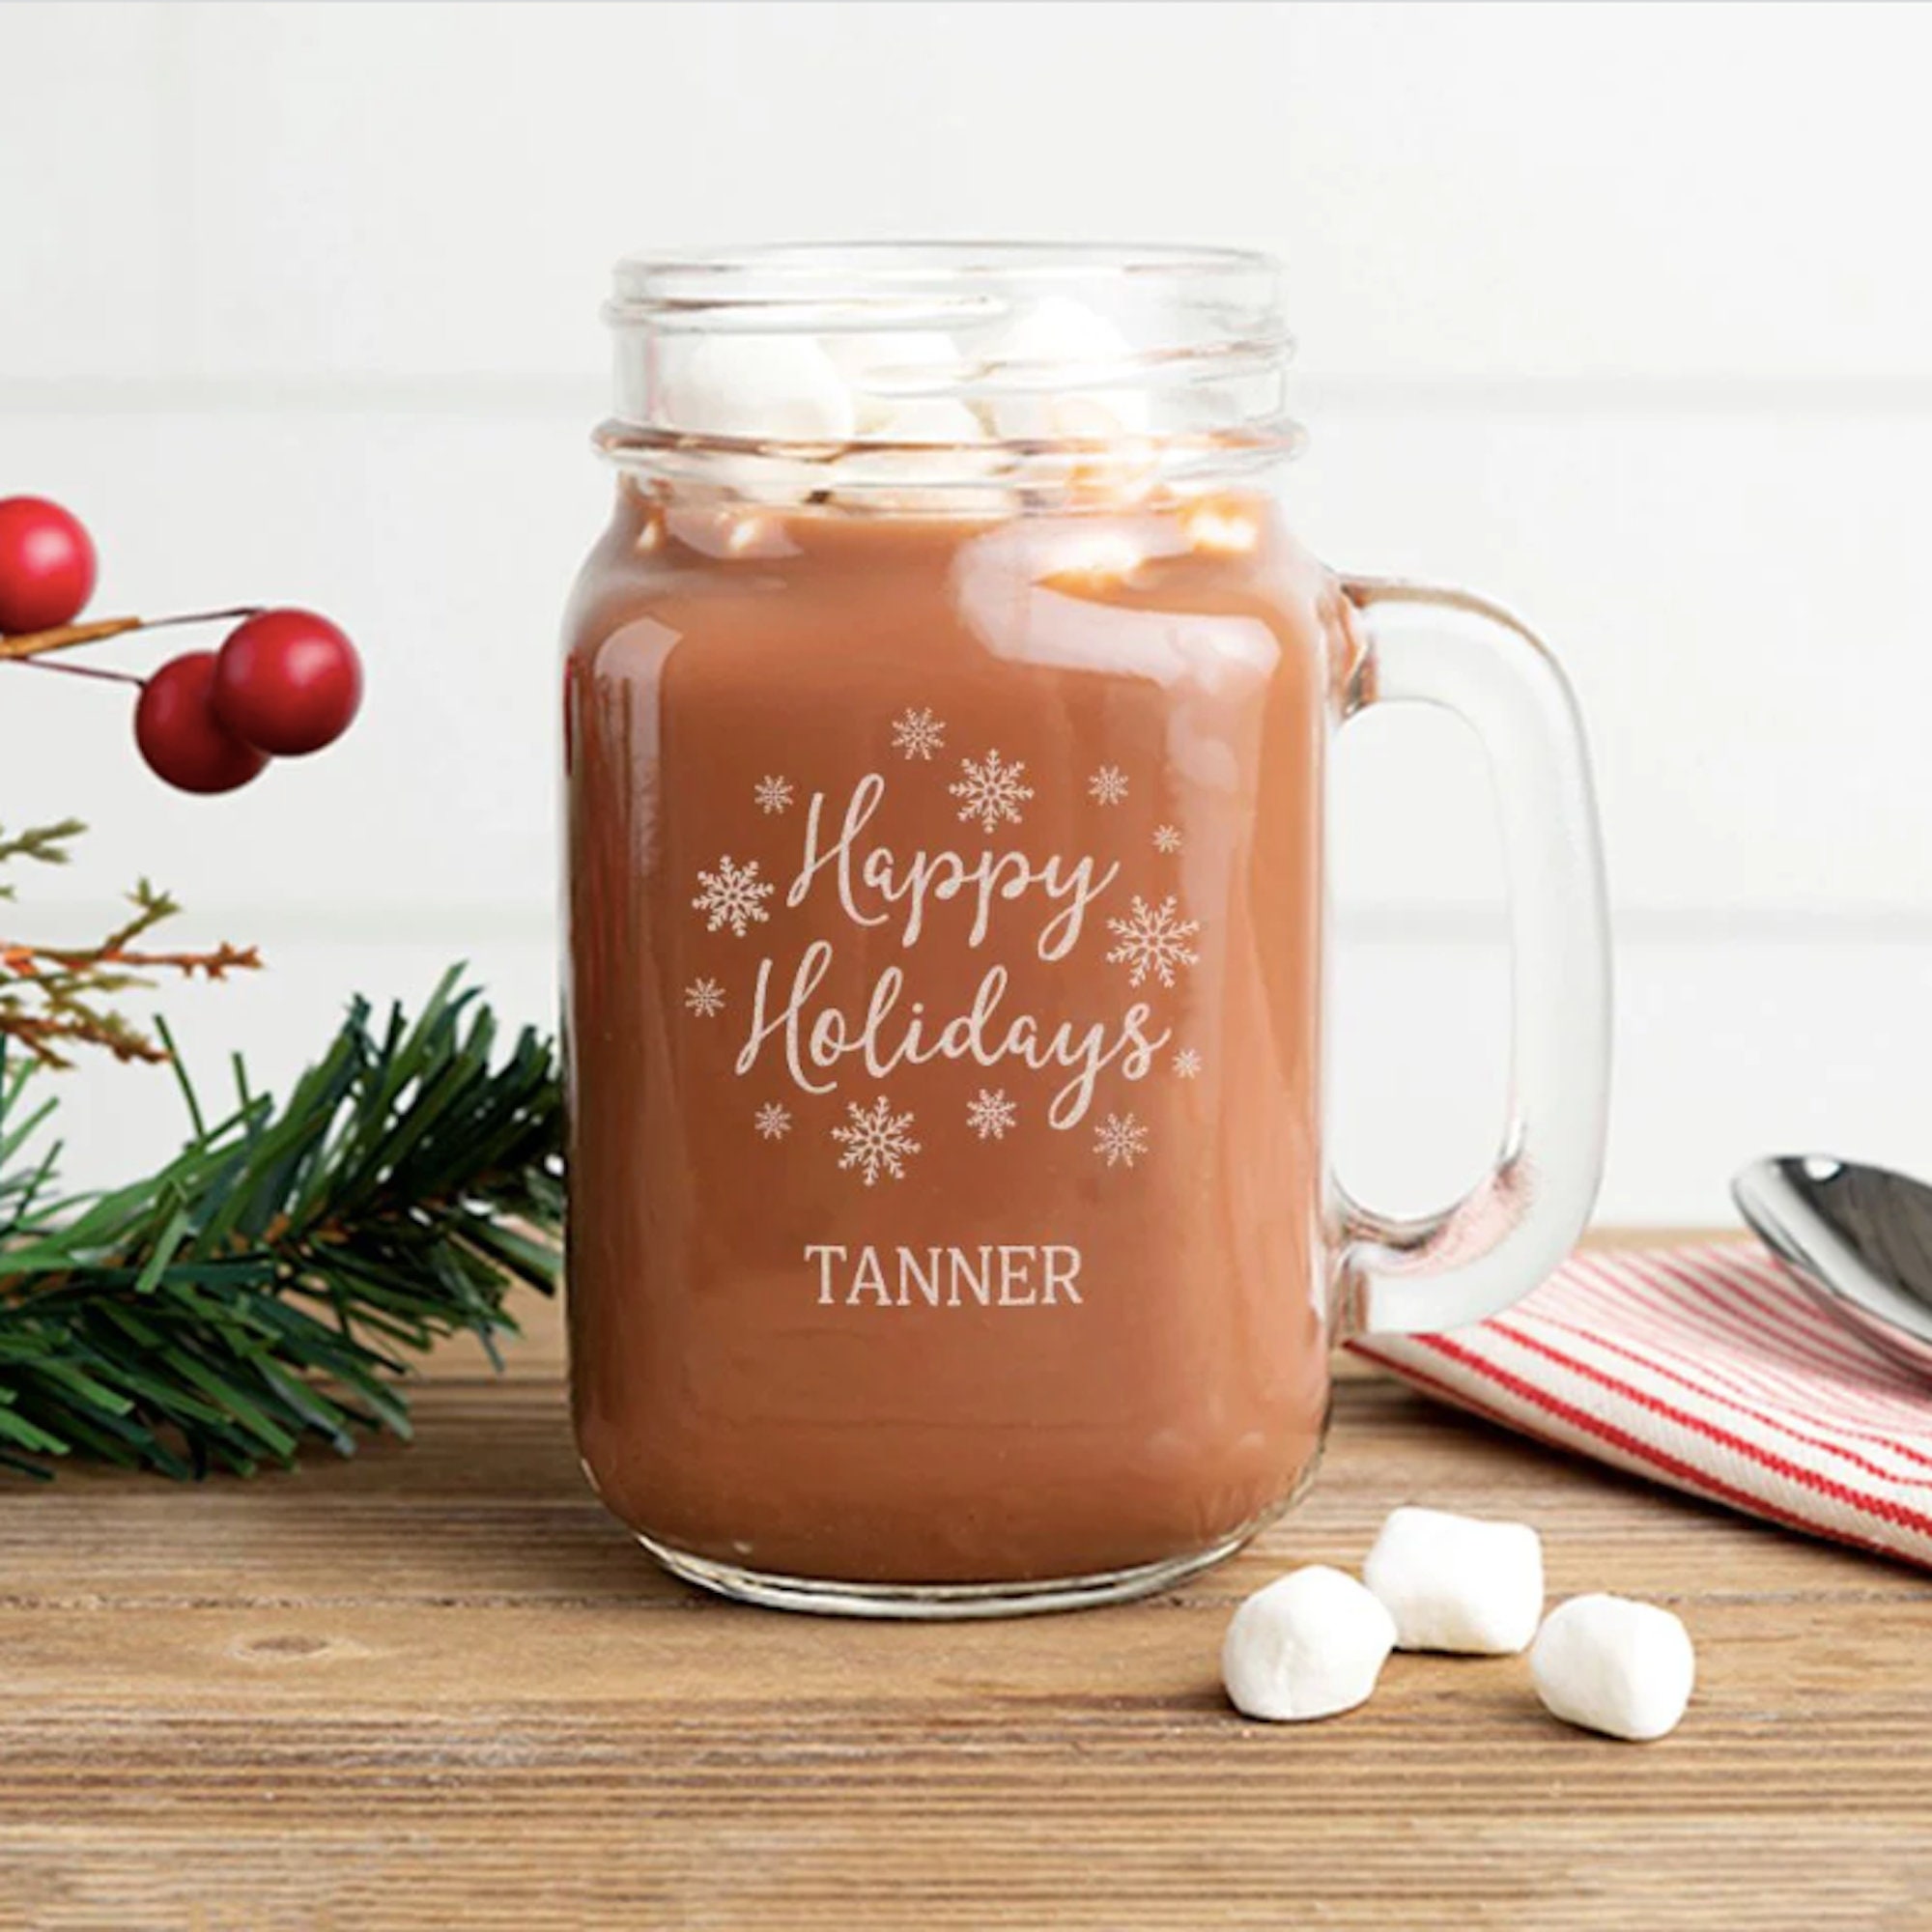 Personalized Mason Jars- Great Christmas Gift